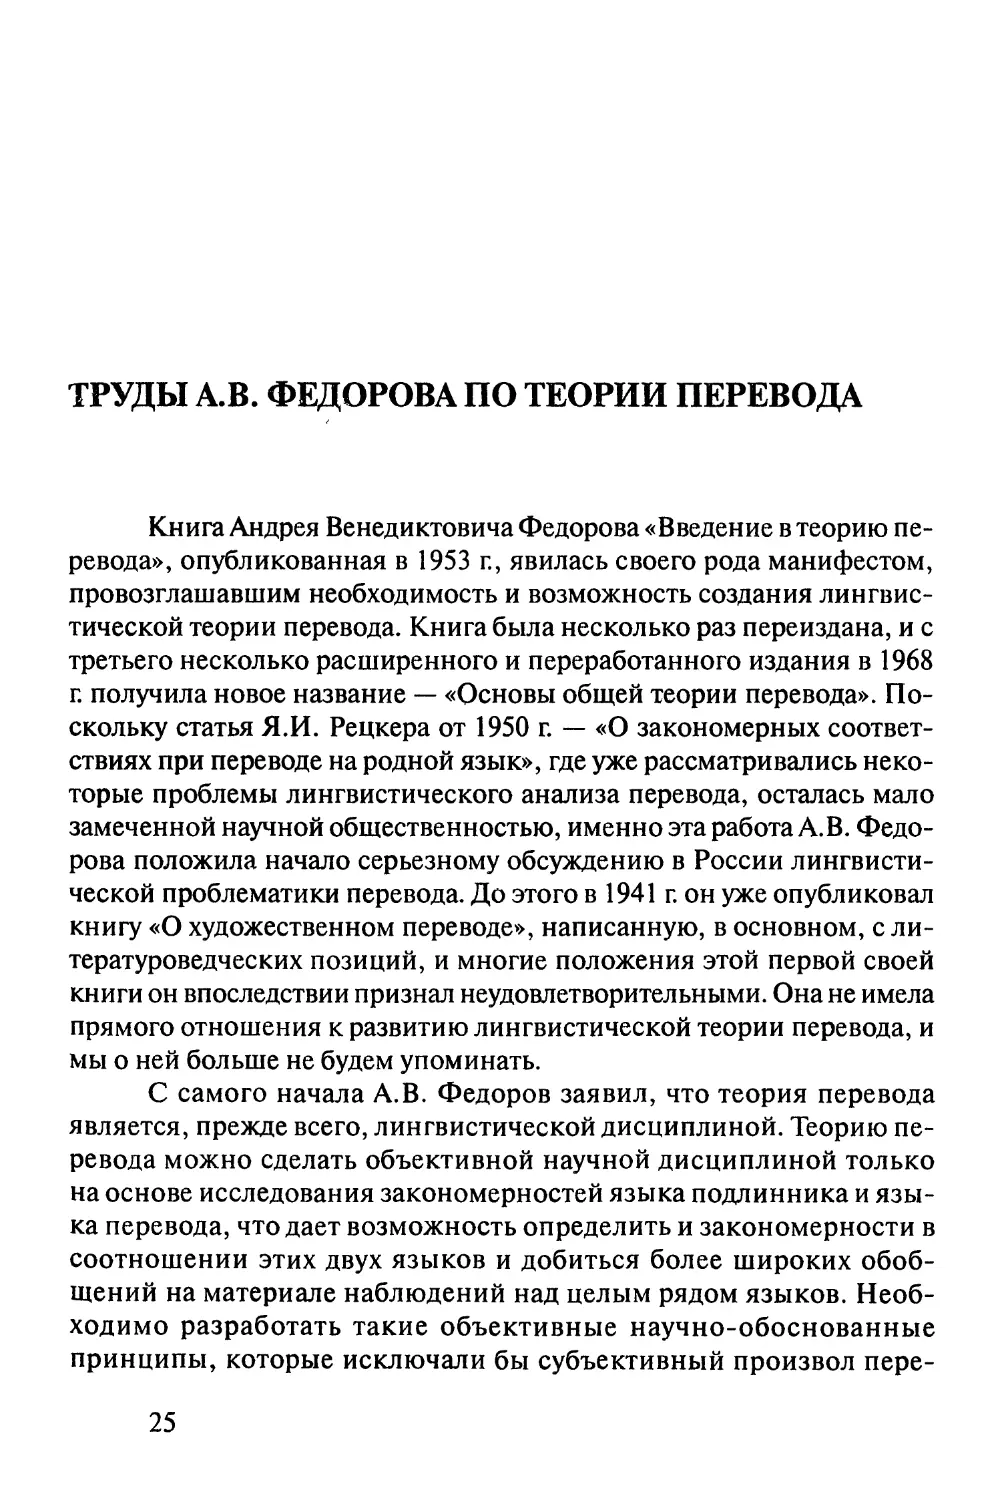 Труды А.В.Федорова по теории перевода